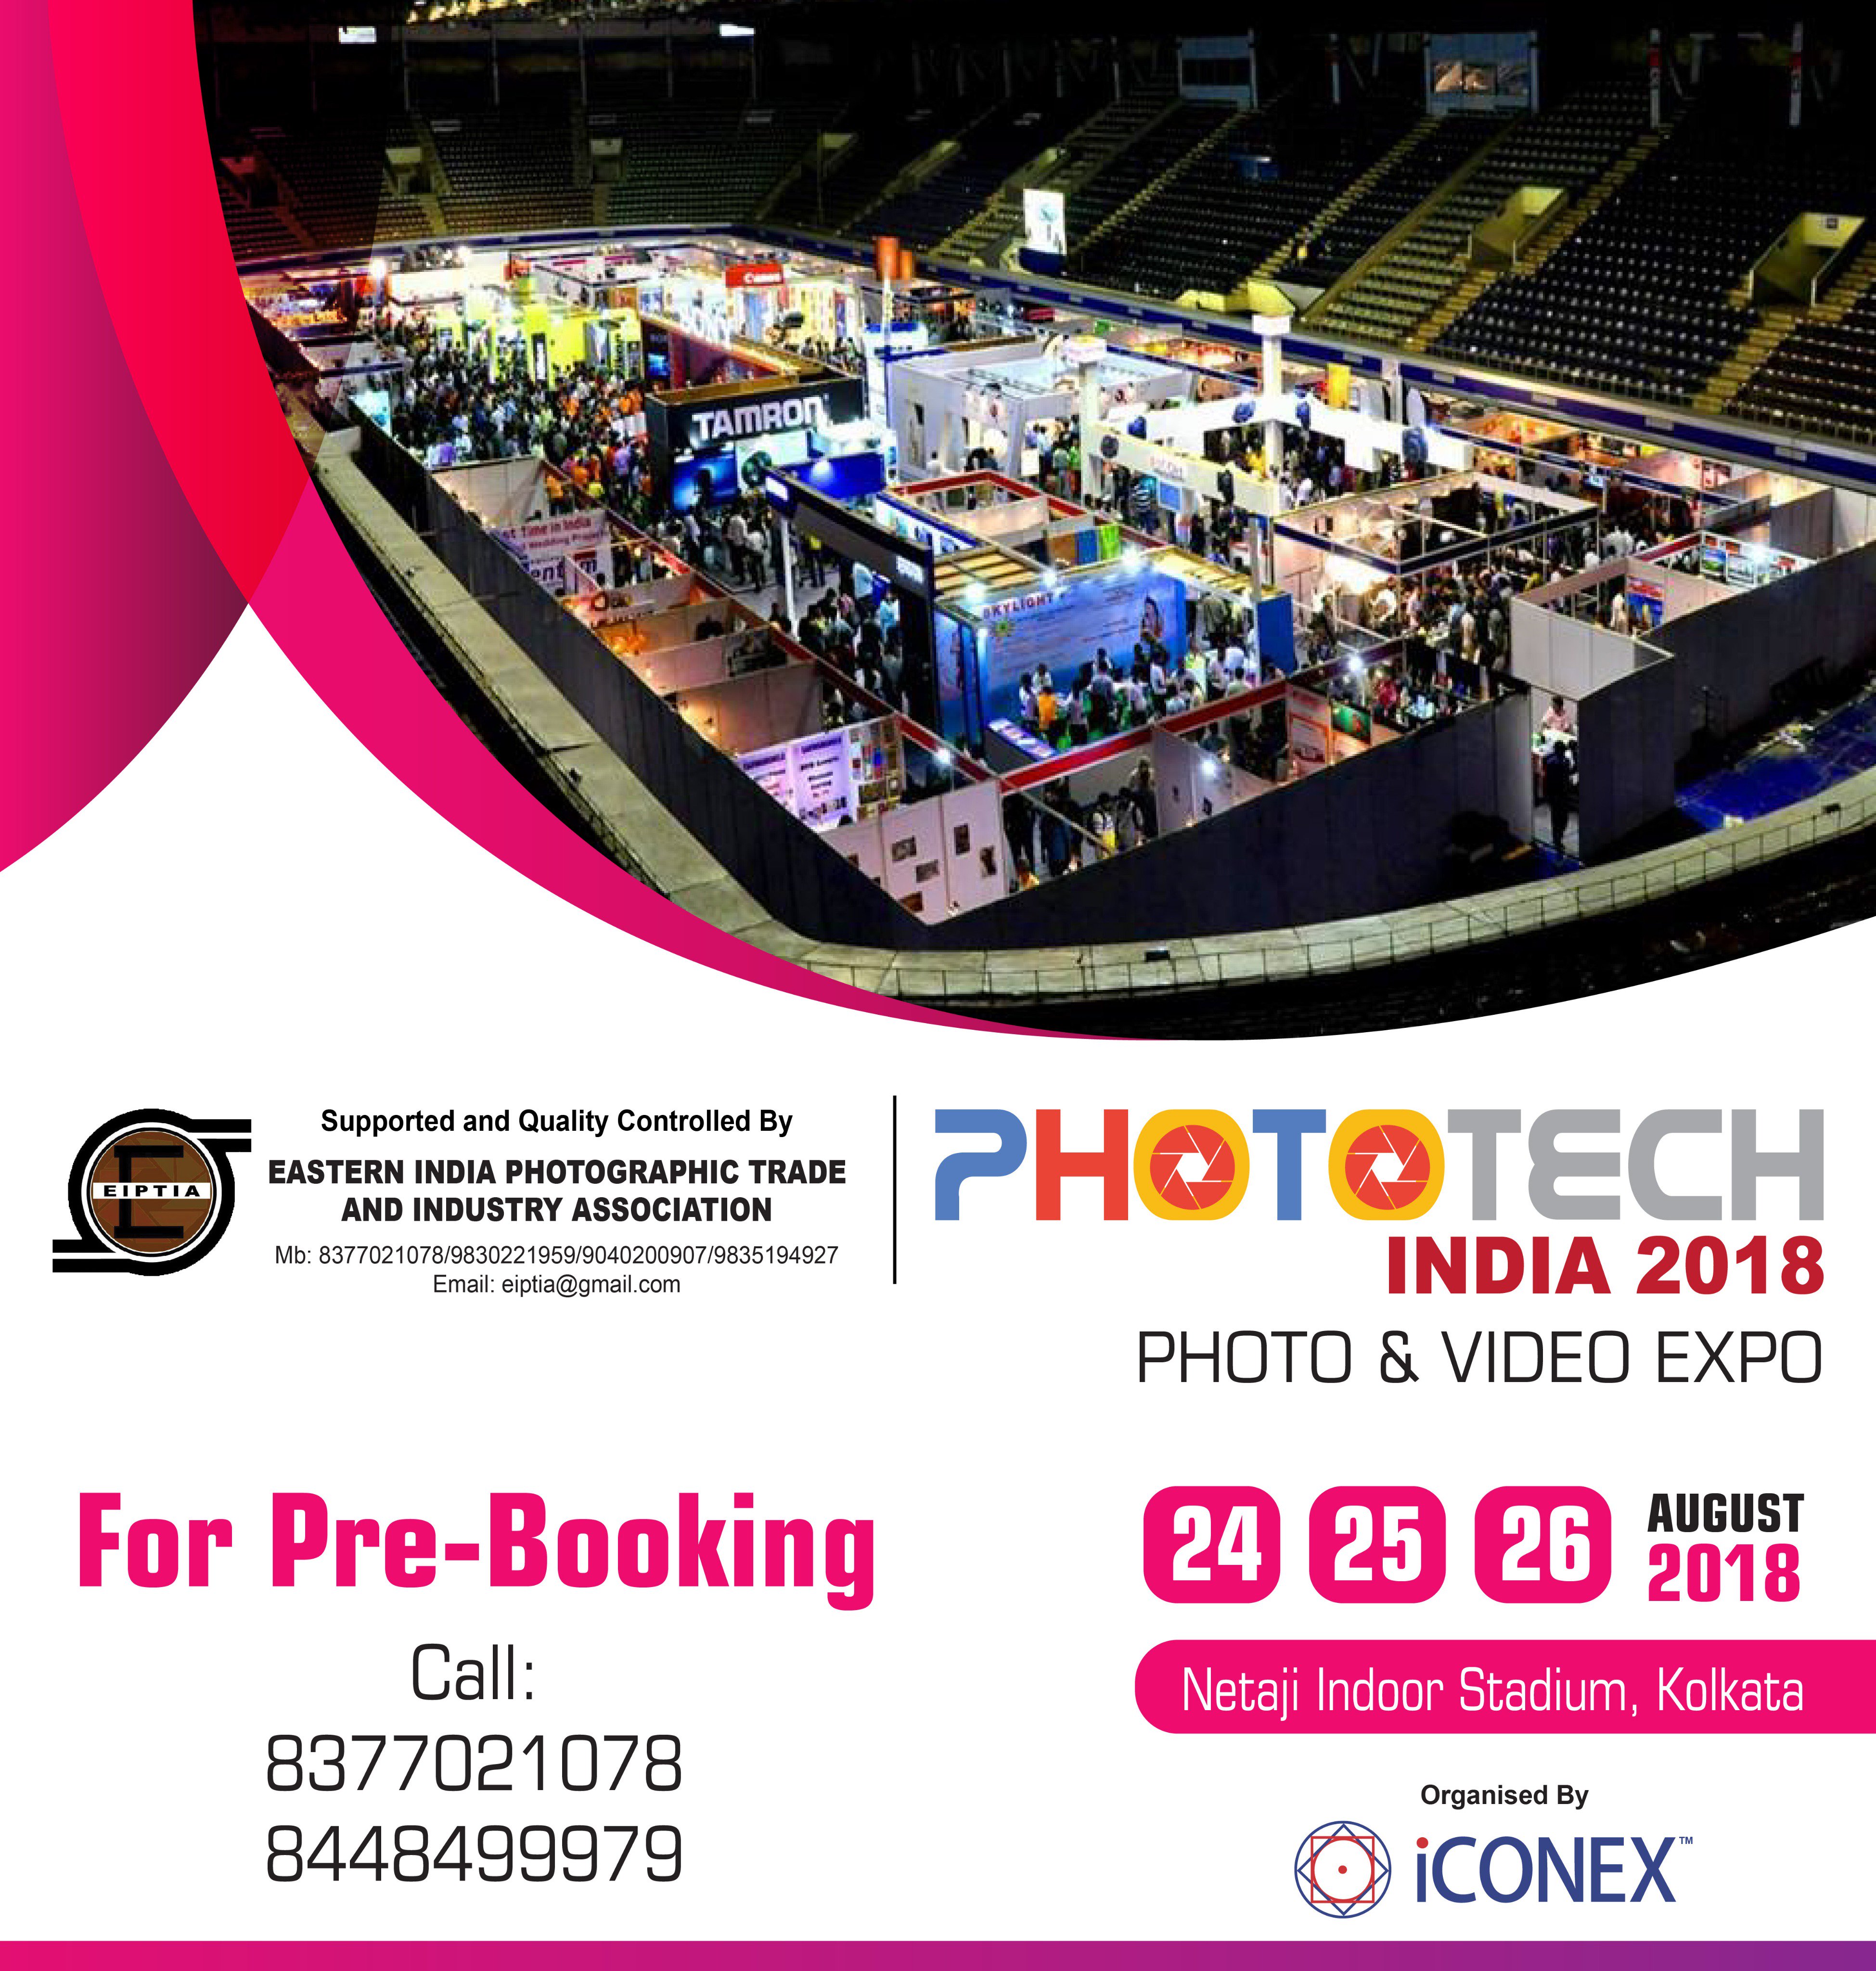 PhotoTech India